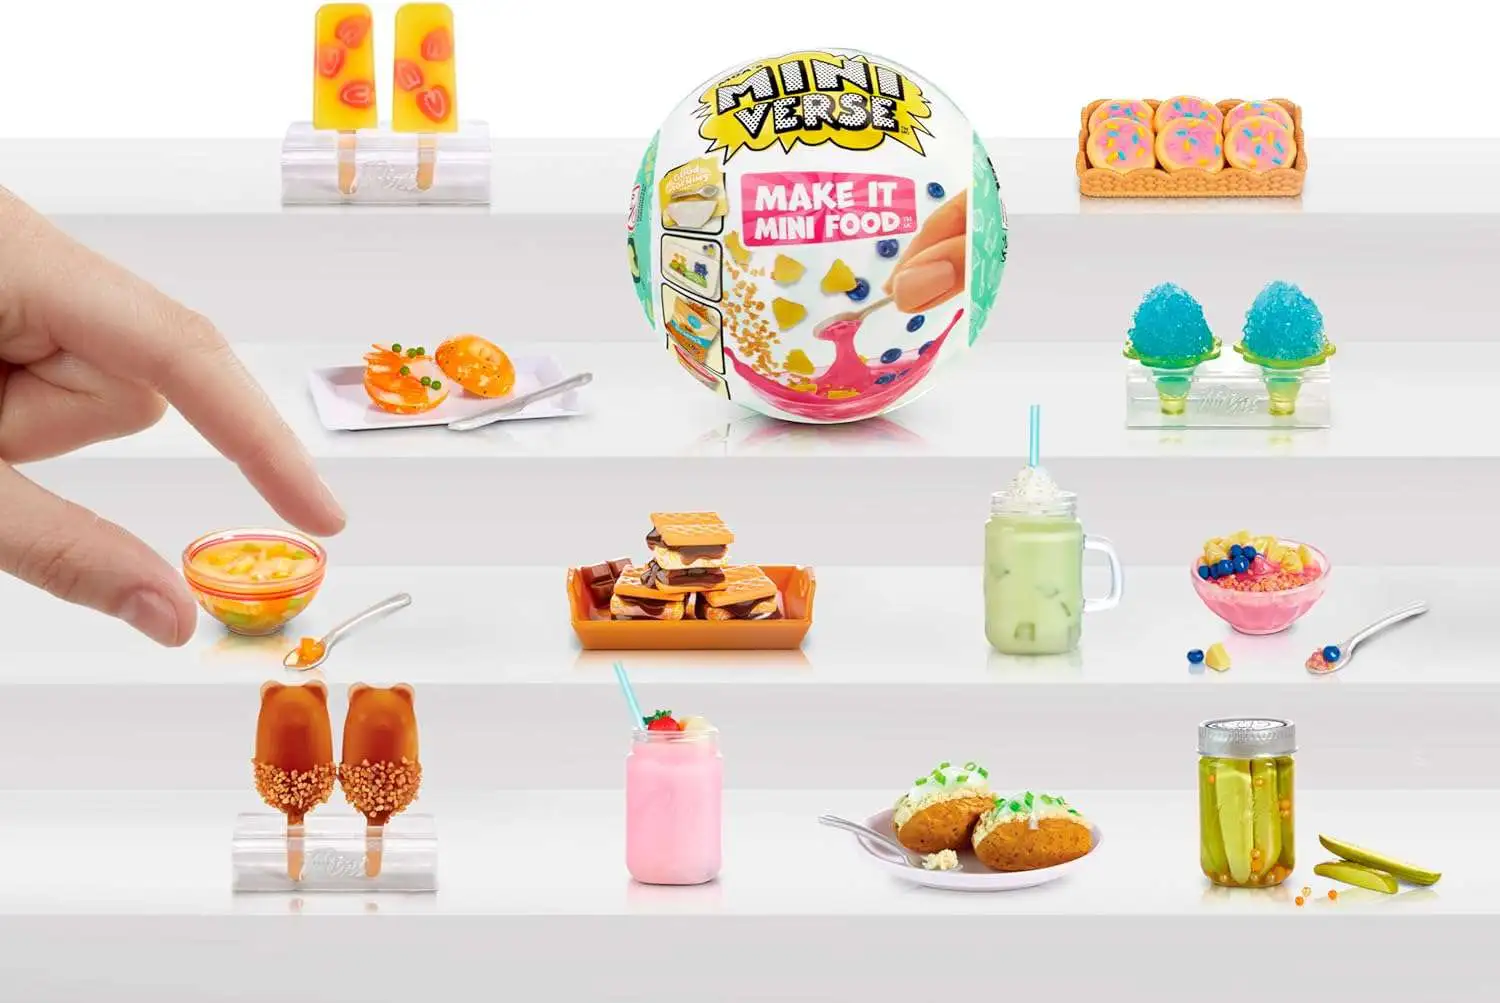 Miniverse Make It Mini Food Ice Cream Social Exclusive Playset NOT EDIBLE  MGA Entertainment - ToyWiz